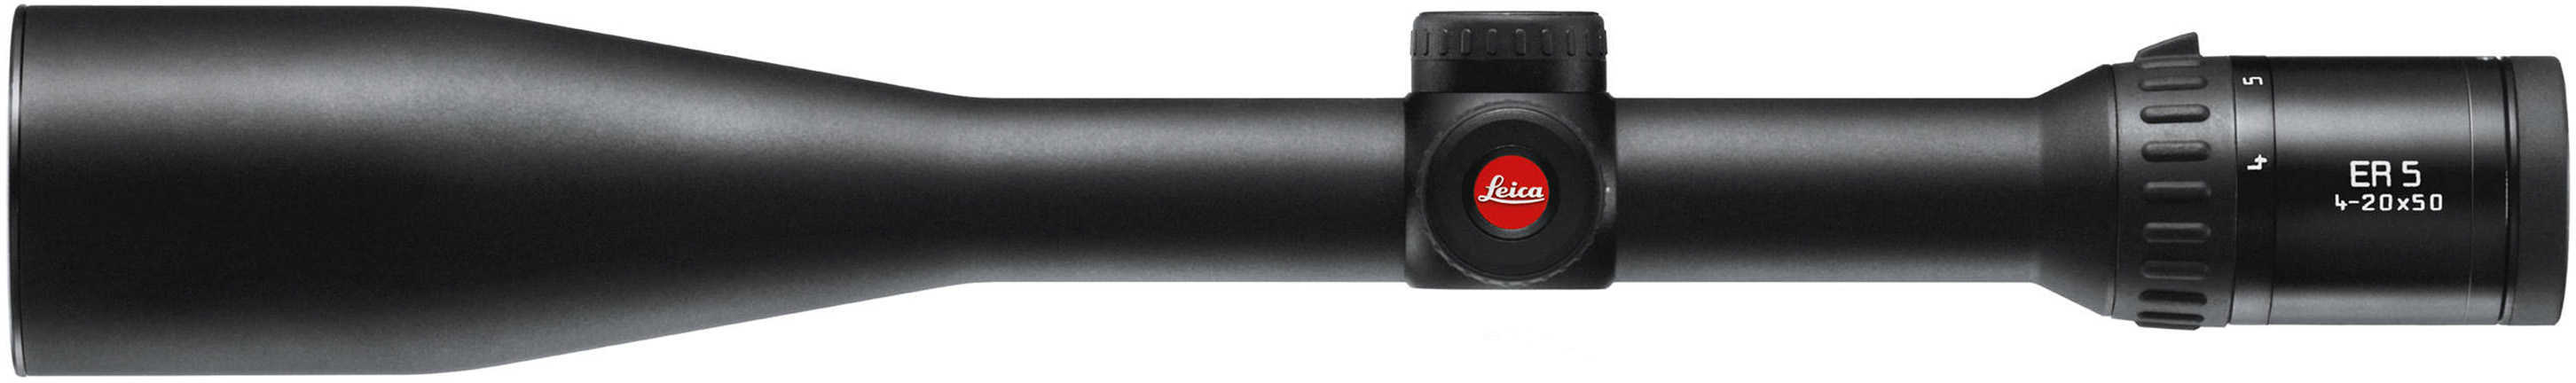 Leica Camera AG Sport Optics ER 5 Riflescope 4-20x50mm 30mm Tube Magnum Ballistic Reticle Matte Black Md: